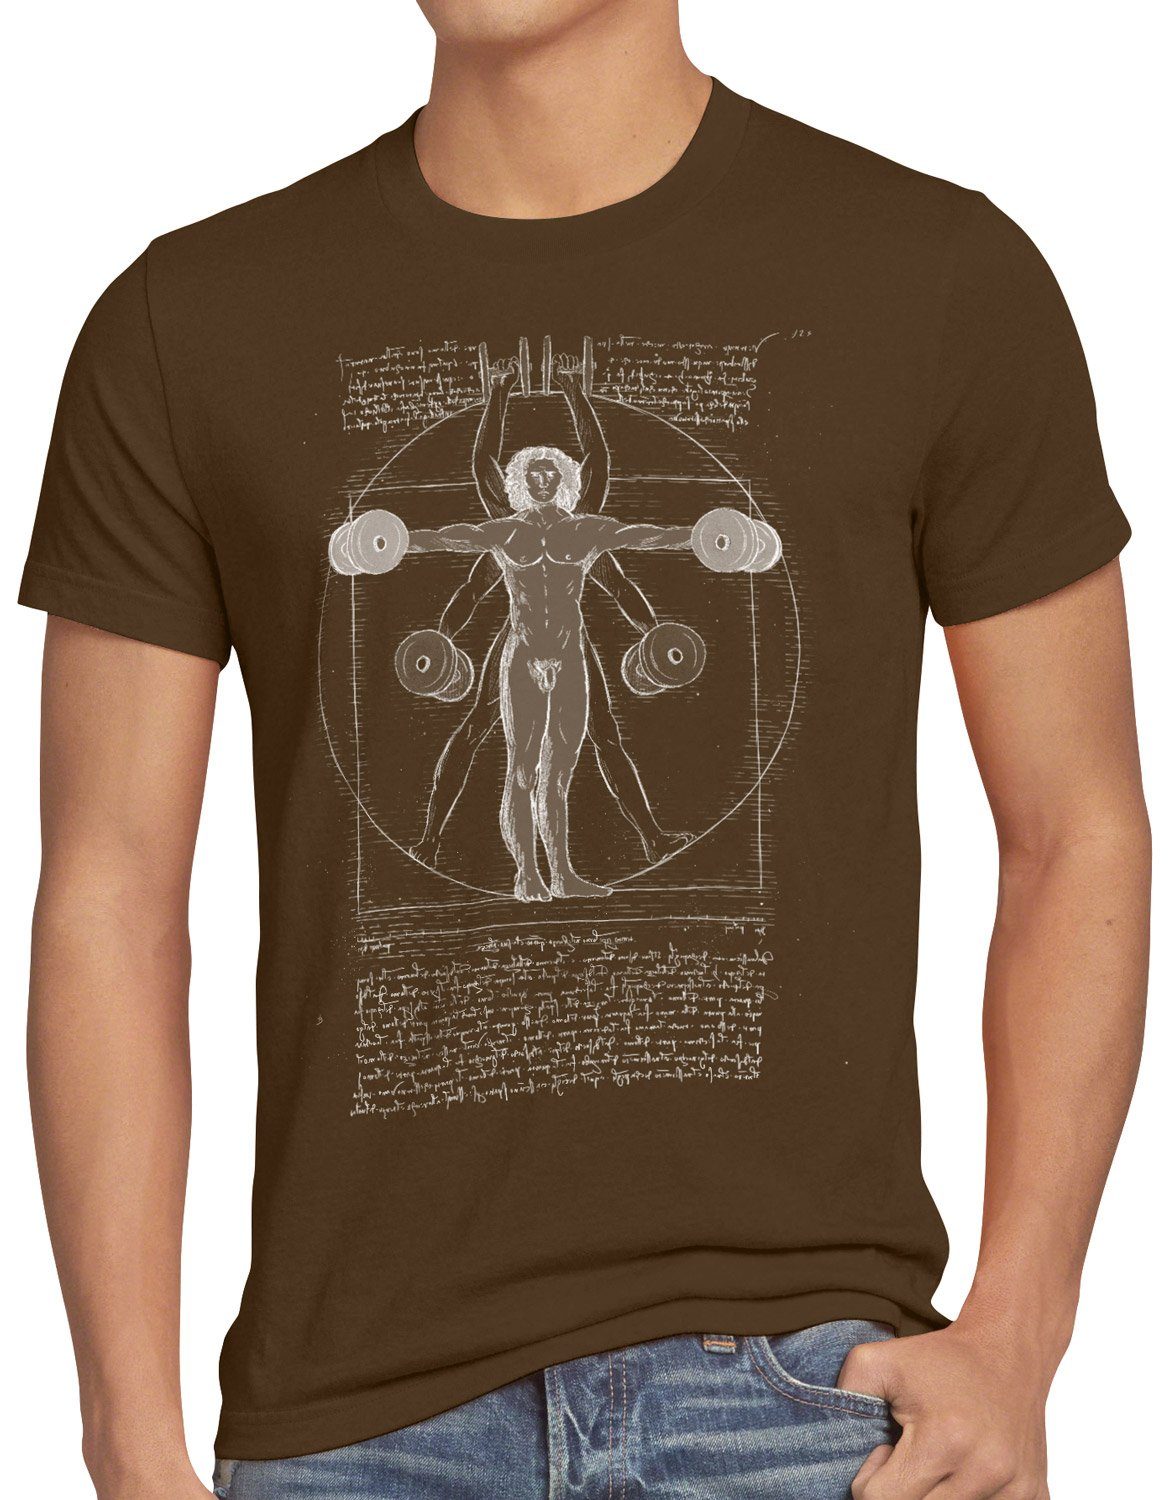 style3 Print-Shirt Herren T-Shirt Vitruvianischer Mensch mit Kurzhantel butterfly rudern training braun